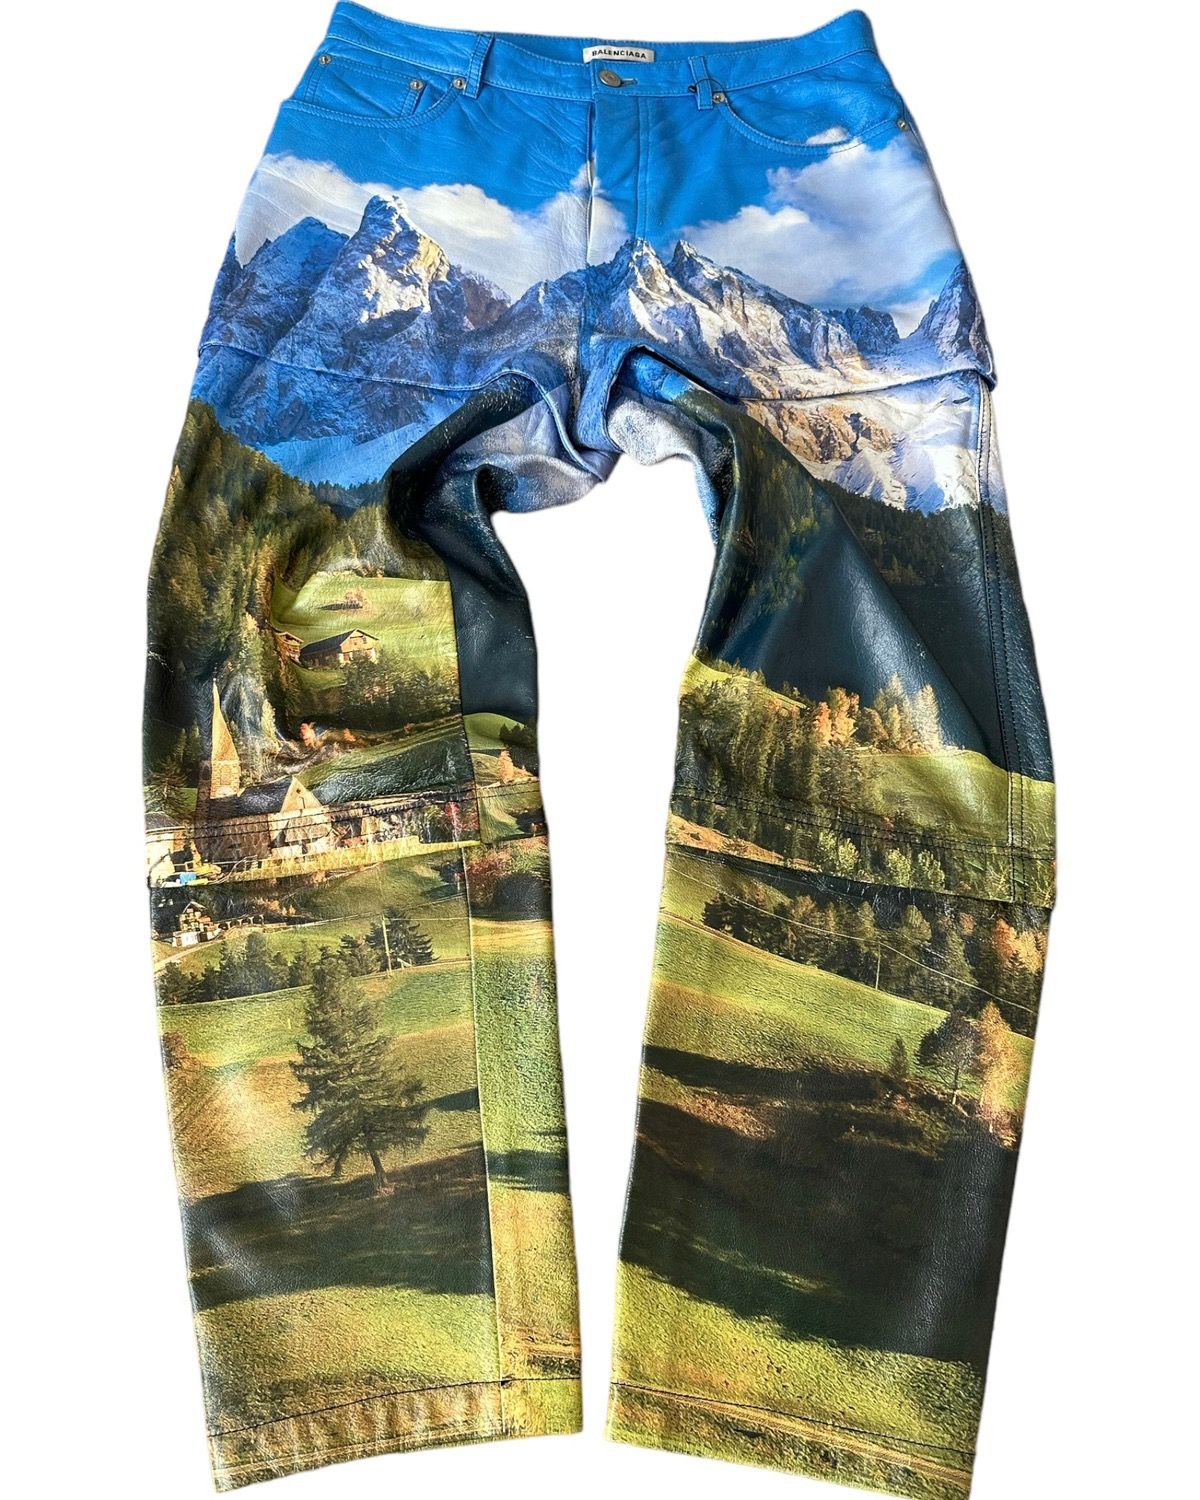 Balenciaga GRAIL 2018 Convertible Painted Calfskin Mountain Pants Size US 32 / EU 48 - 1 Preview